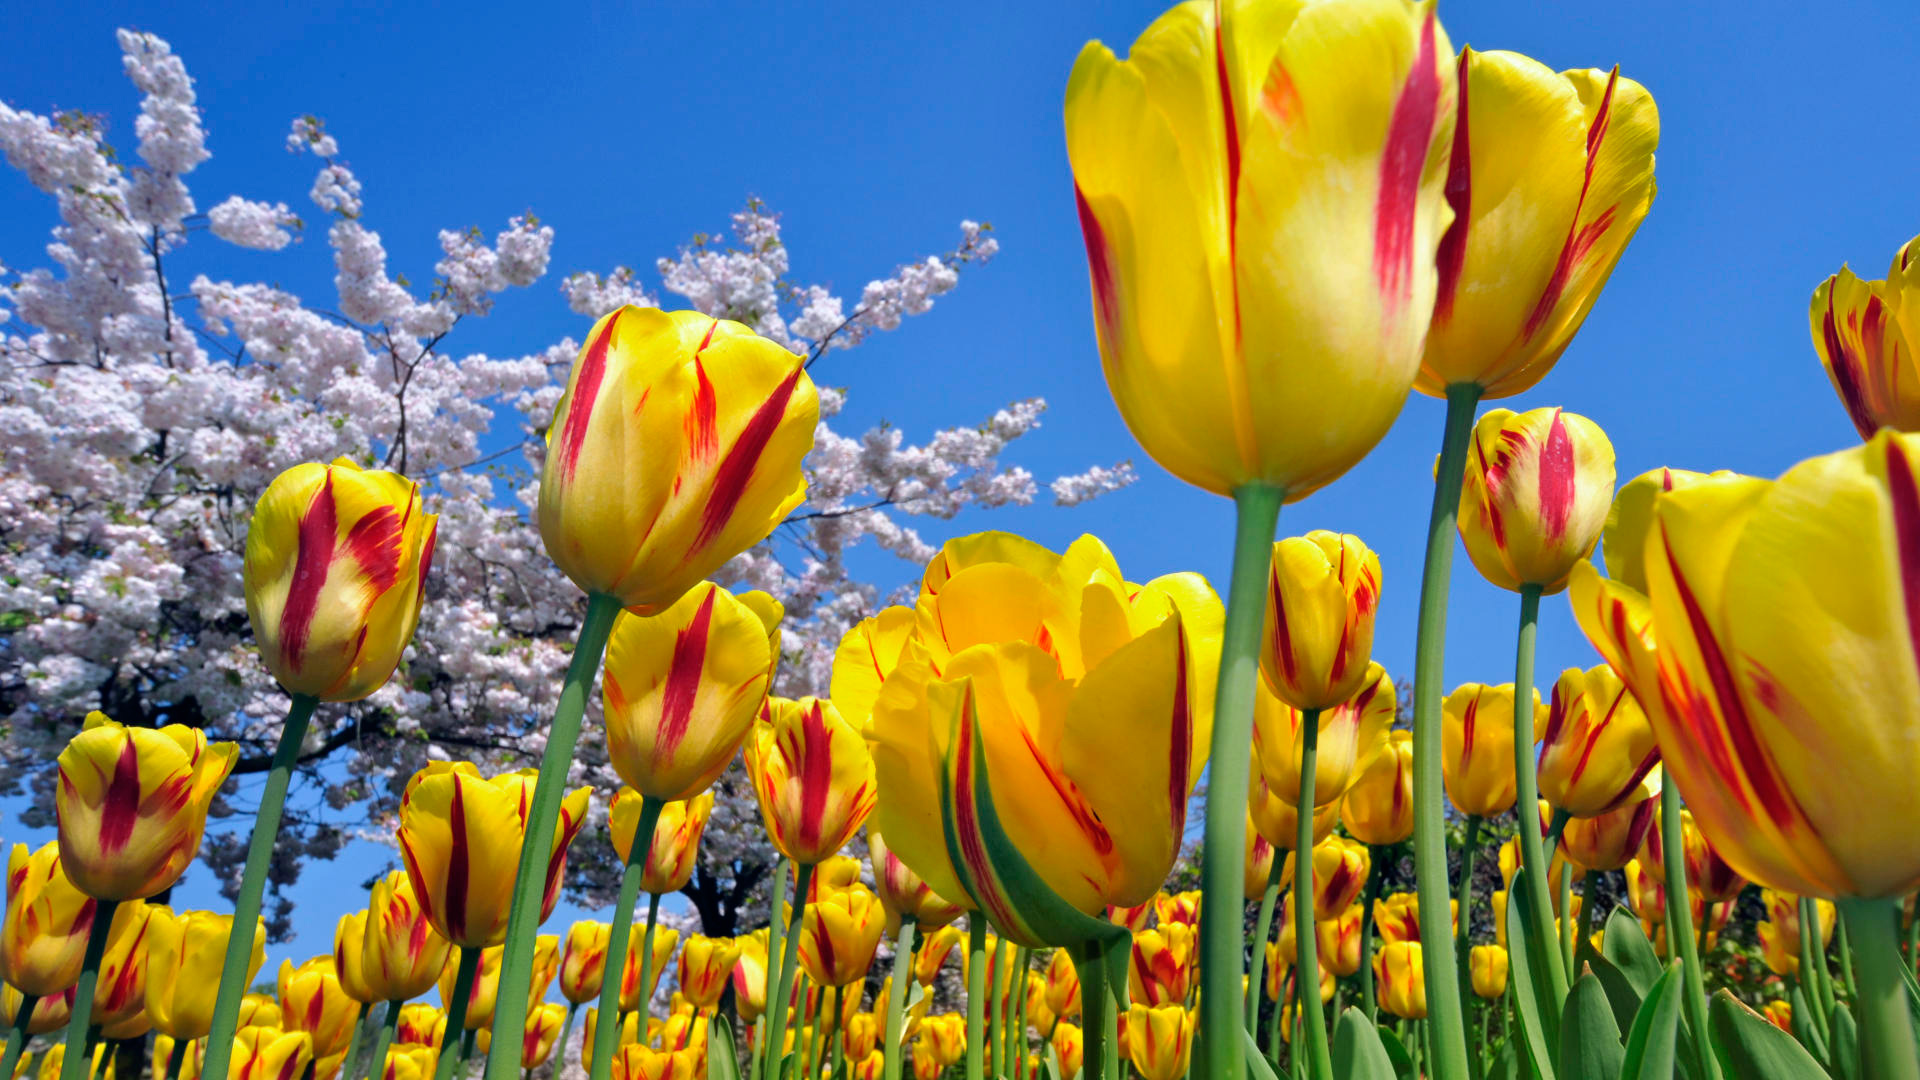 yellow_red_tulips_1920x1080